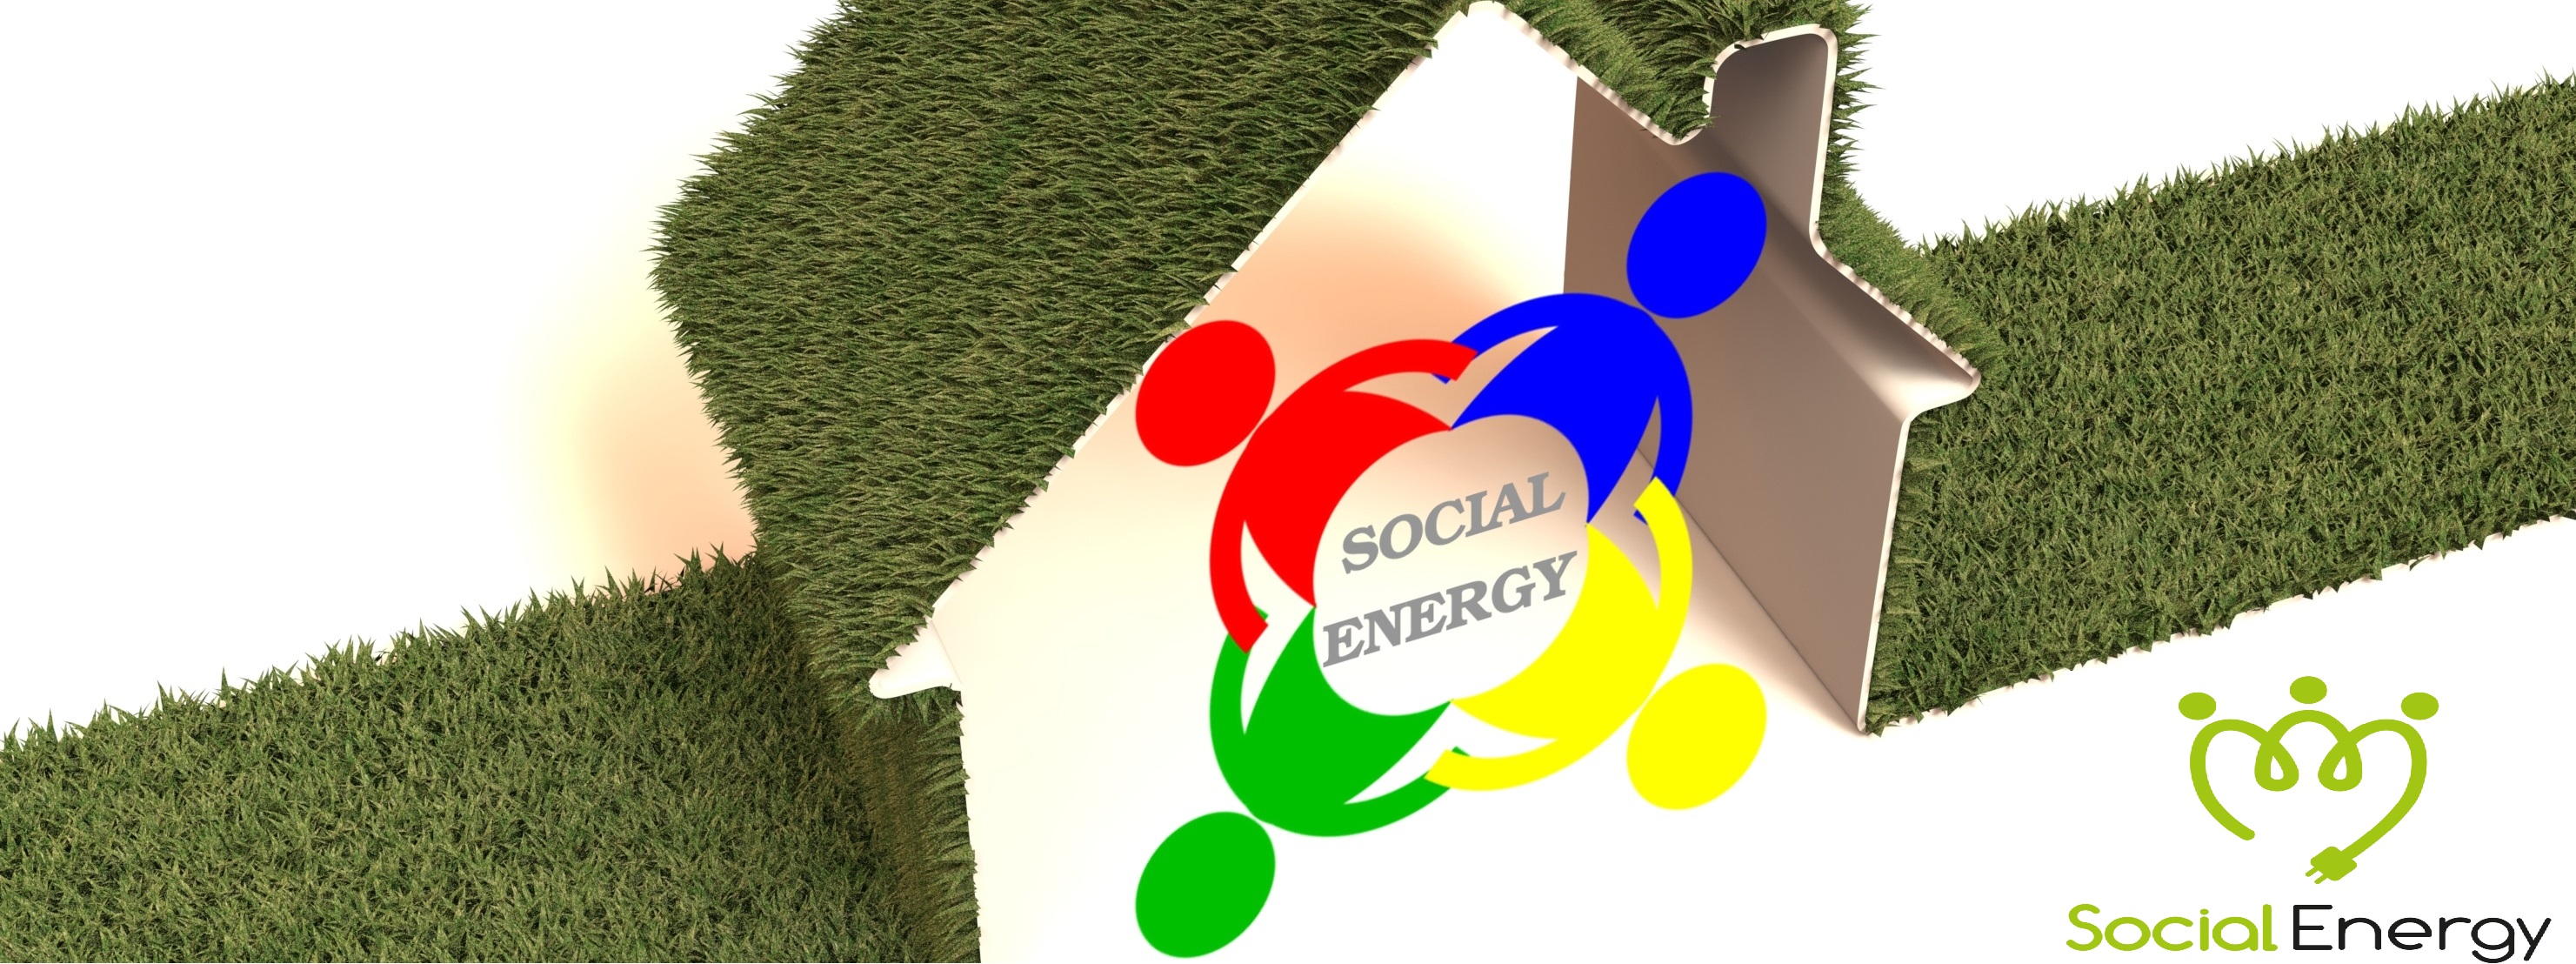 Social energy